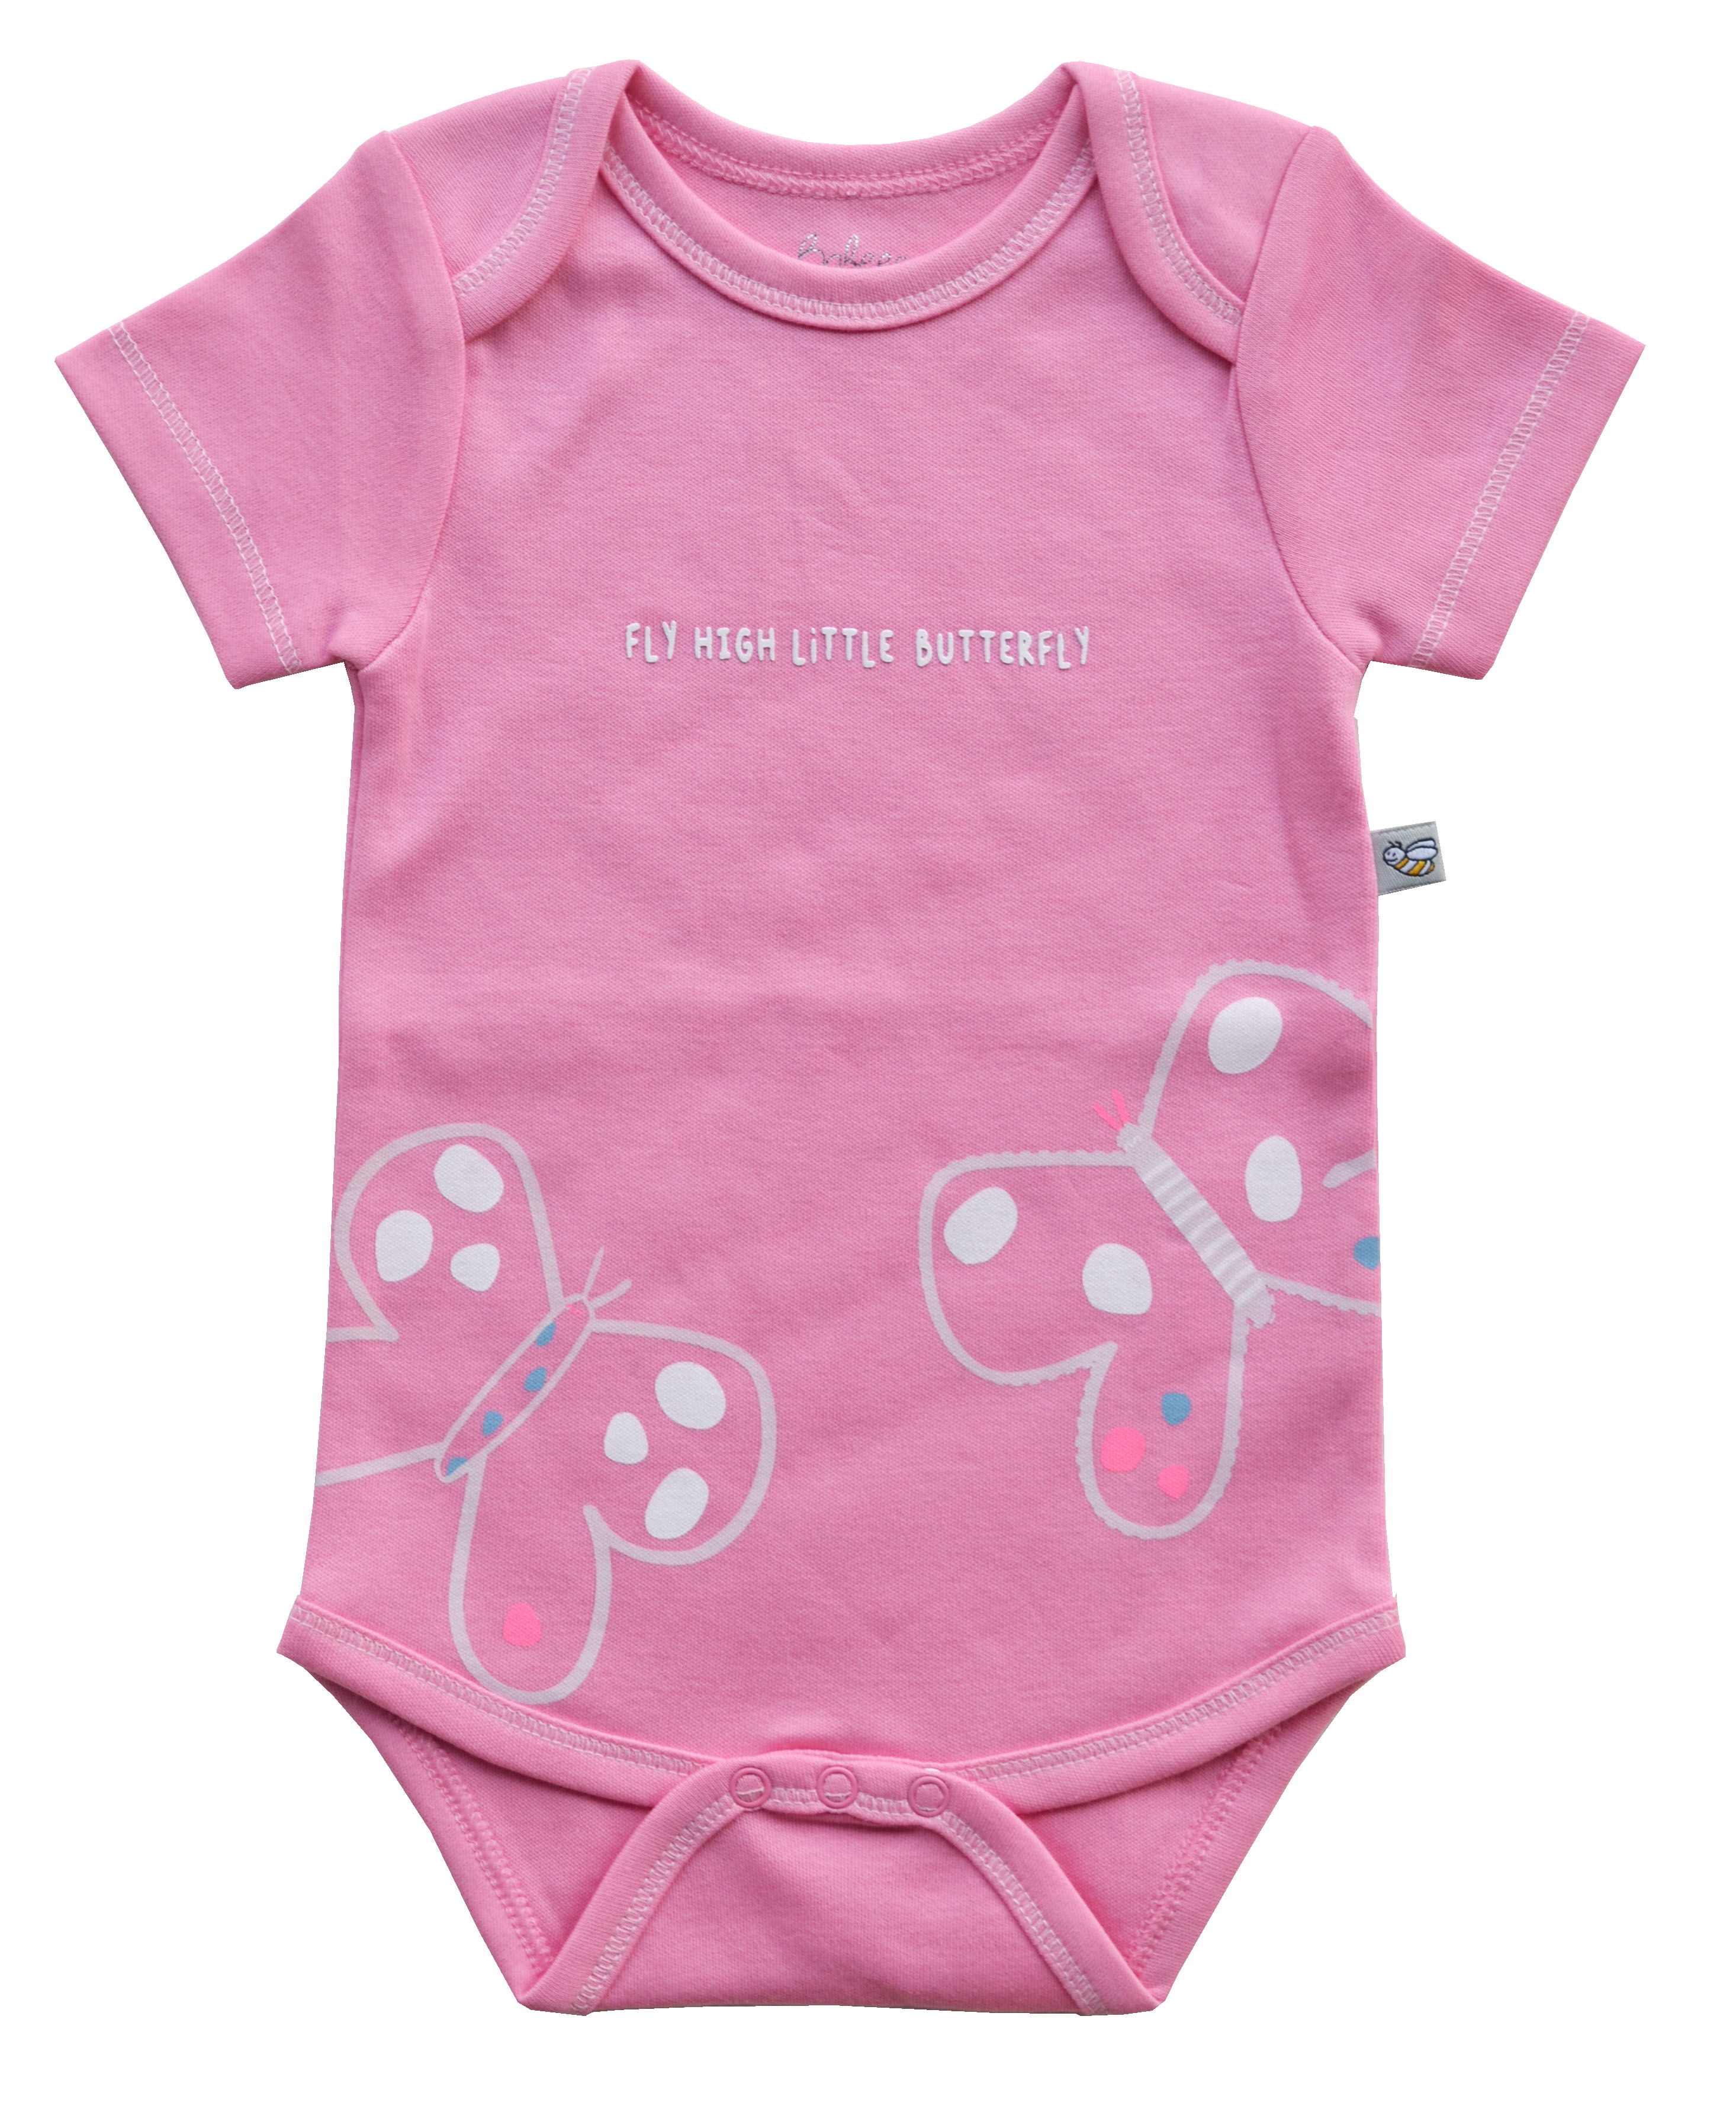 Pink Butterfly print Baby Romper/Onesie